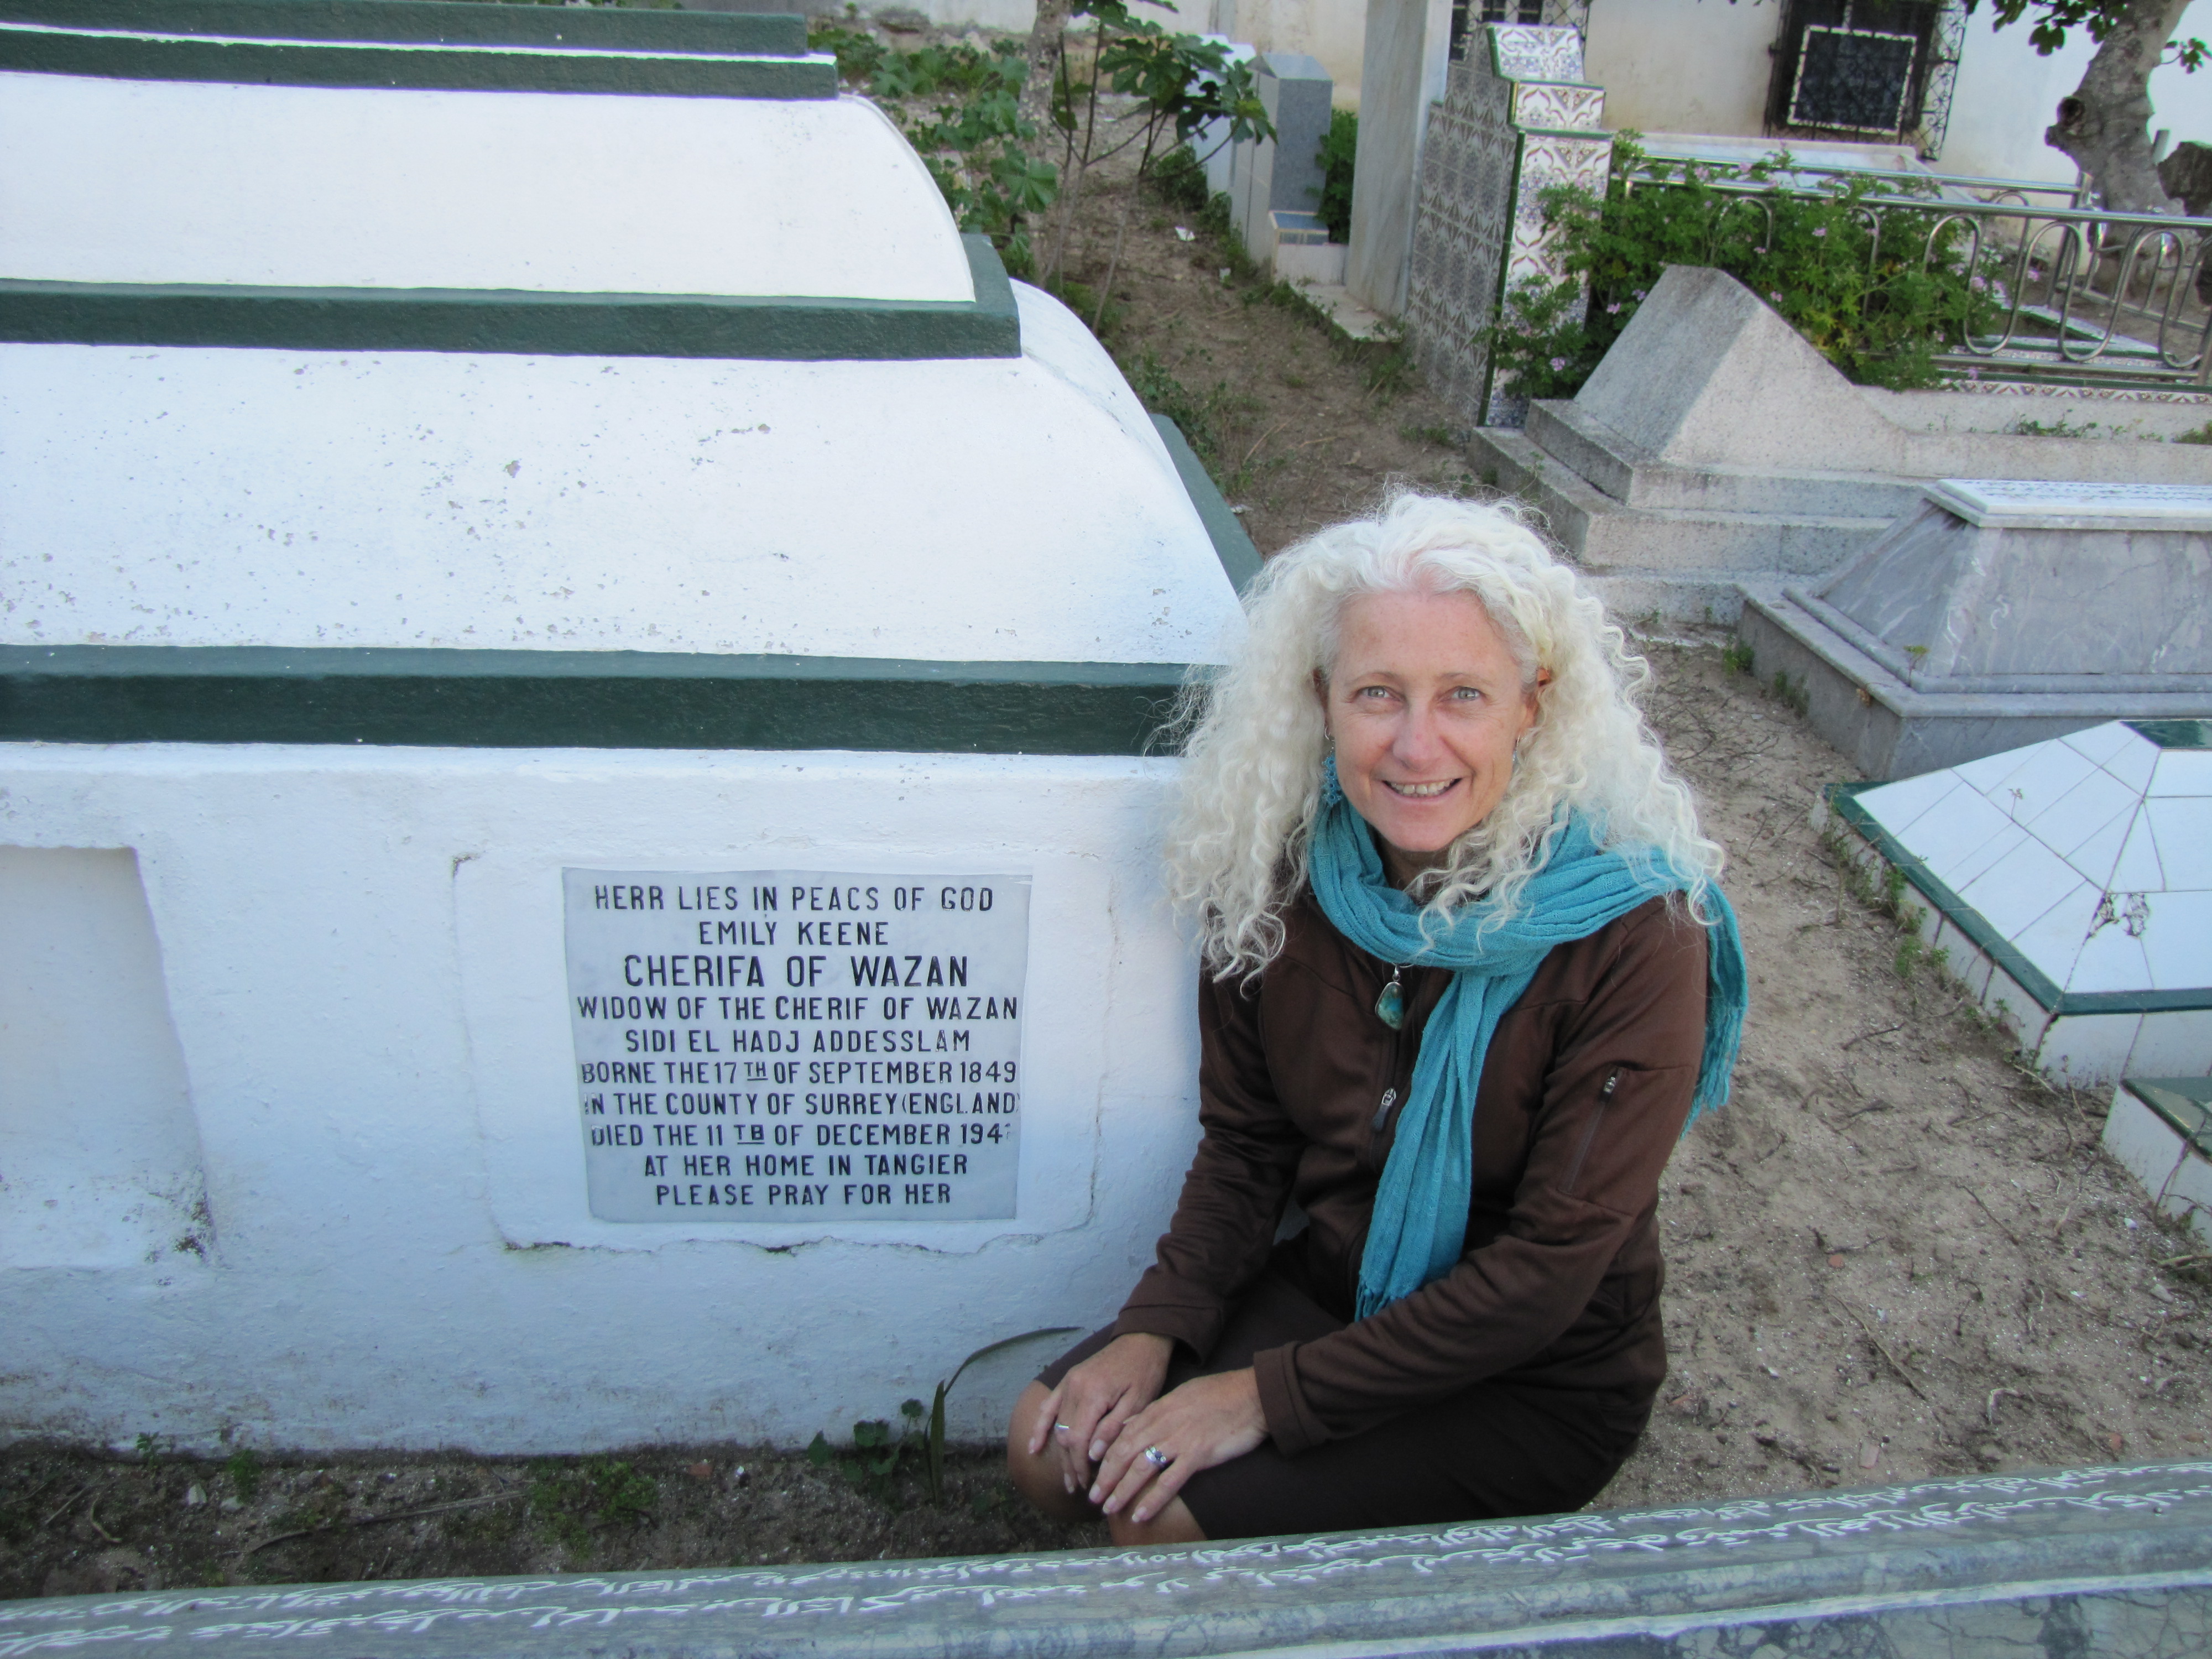 La tombe d'Emily Keene dans la zaouia de Dar Dmana à Ouezzane. / Source : https://pippasperegrinations.wordpress.com